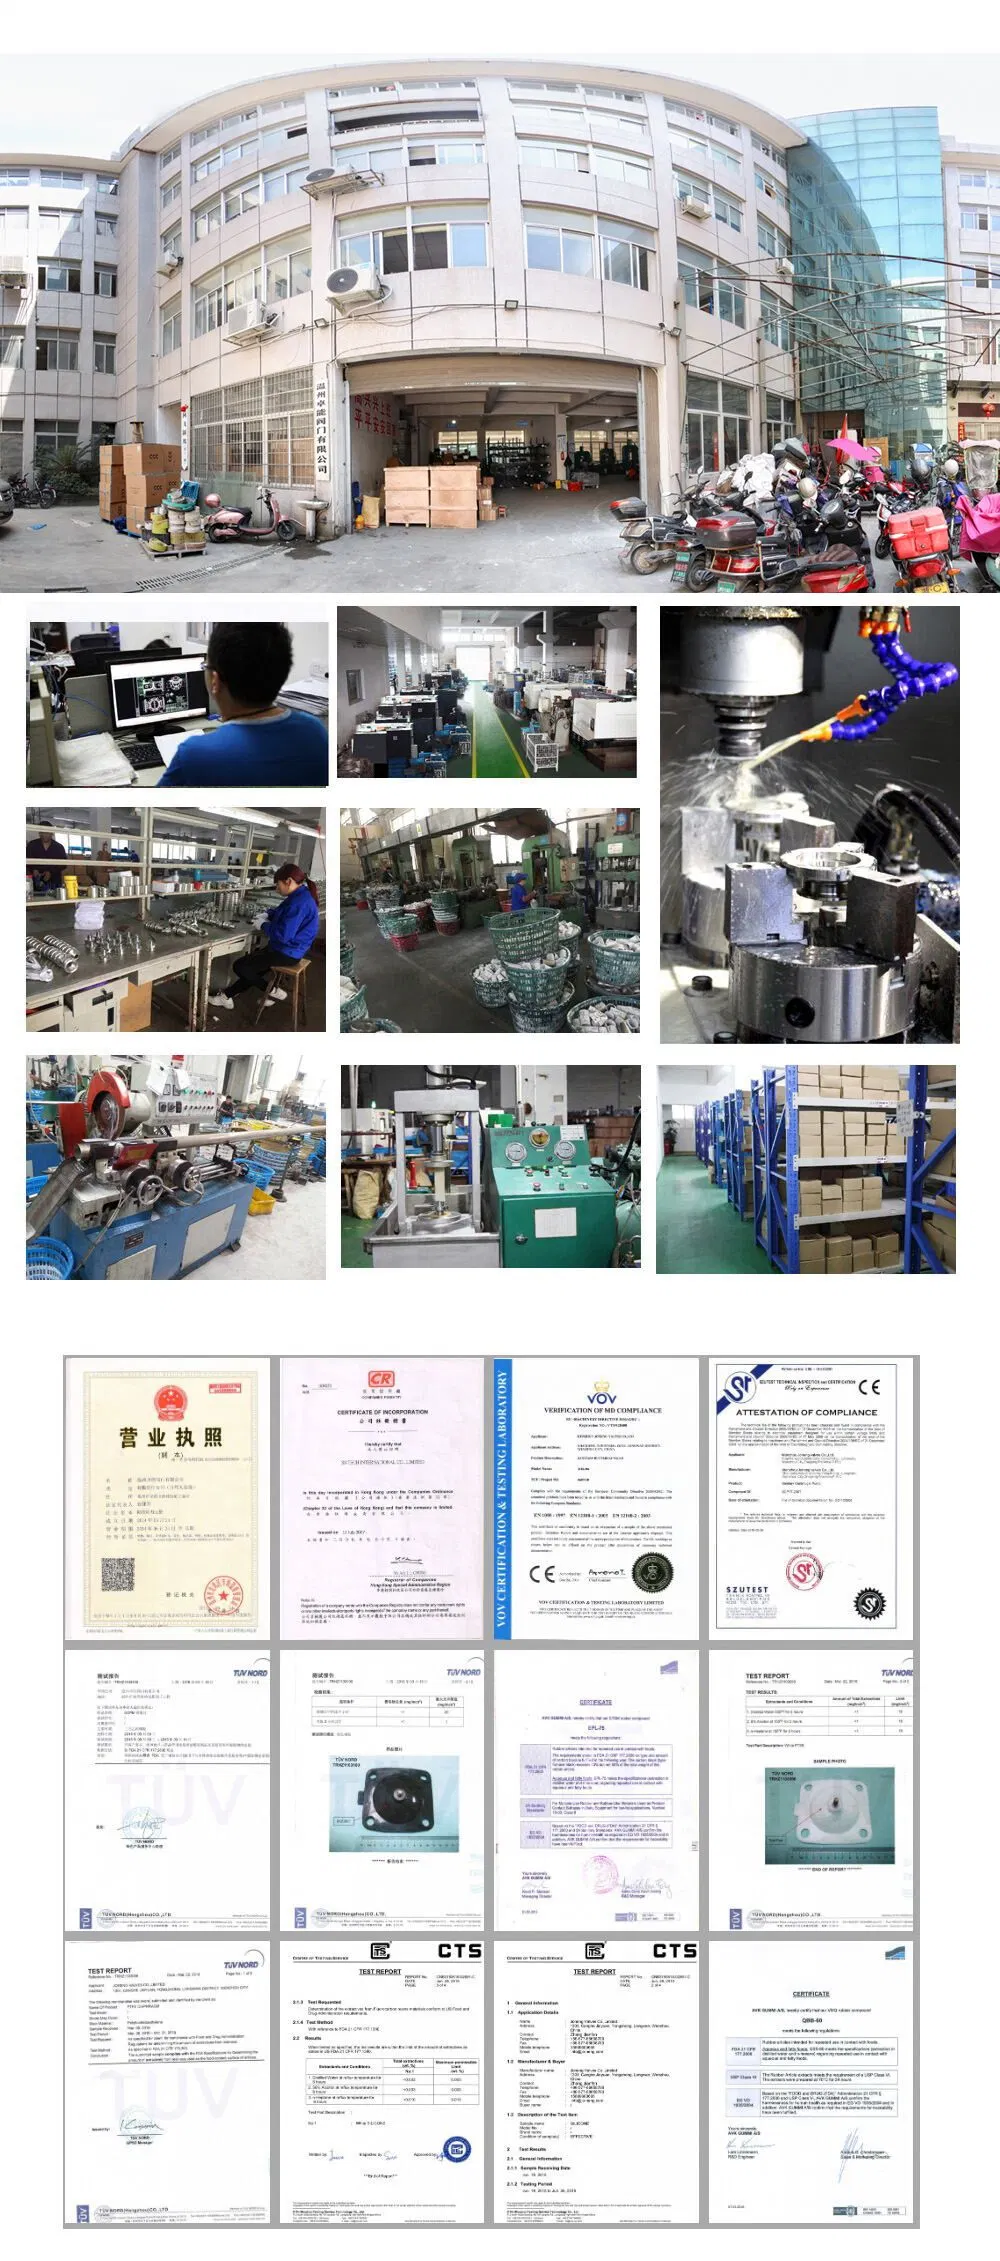 Joneng Stainless Steel Sanitary Food Grade Th6 Pipe Support (JN-PL 1007)